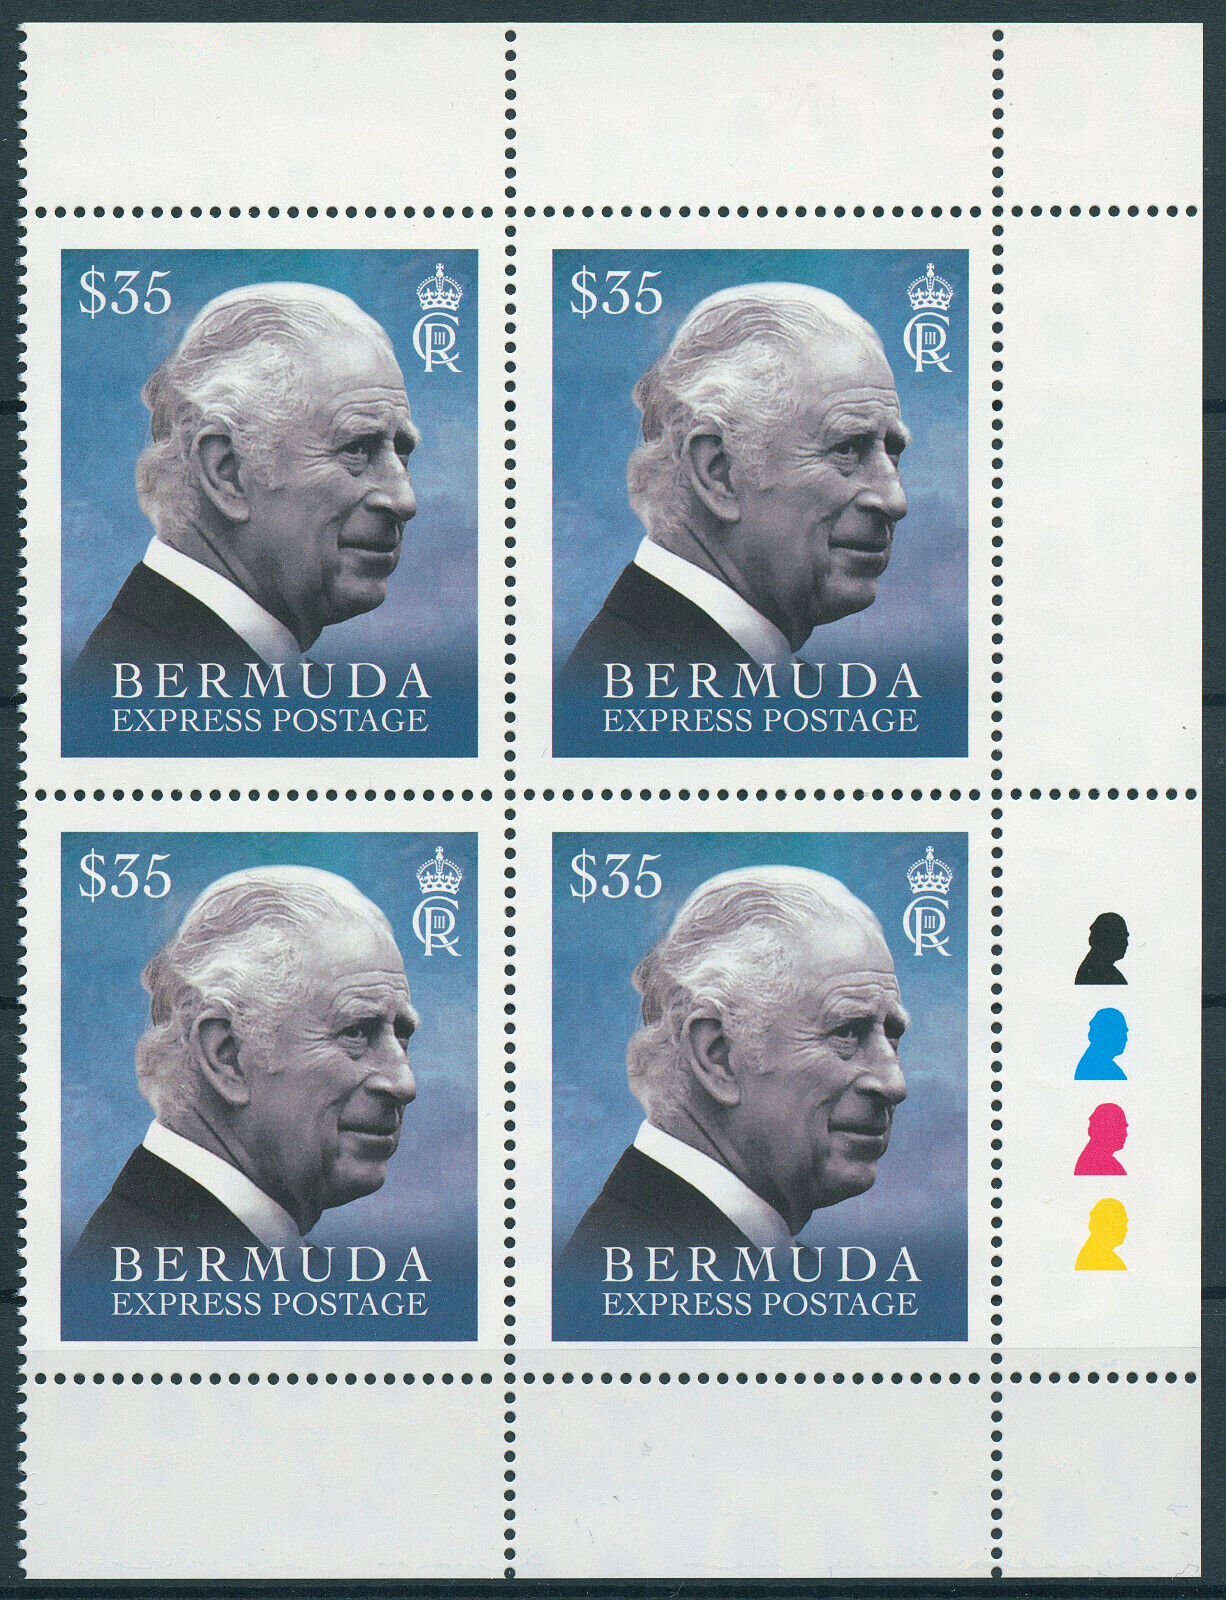 Bermuda 2023 MNH Royalty Stamps King Charles III Express Postage 4v Block